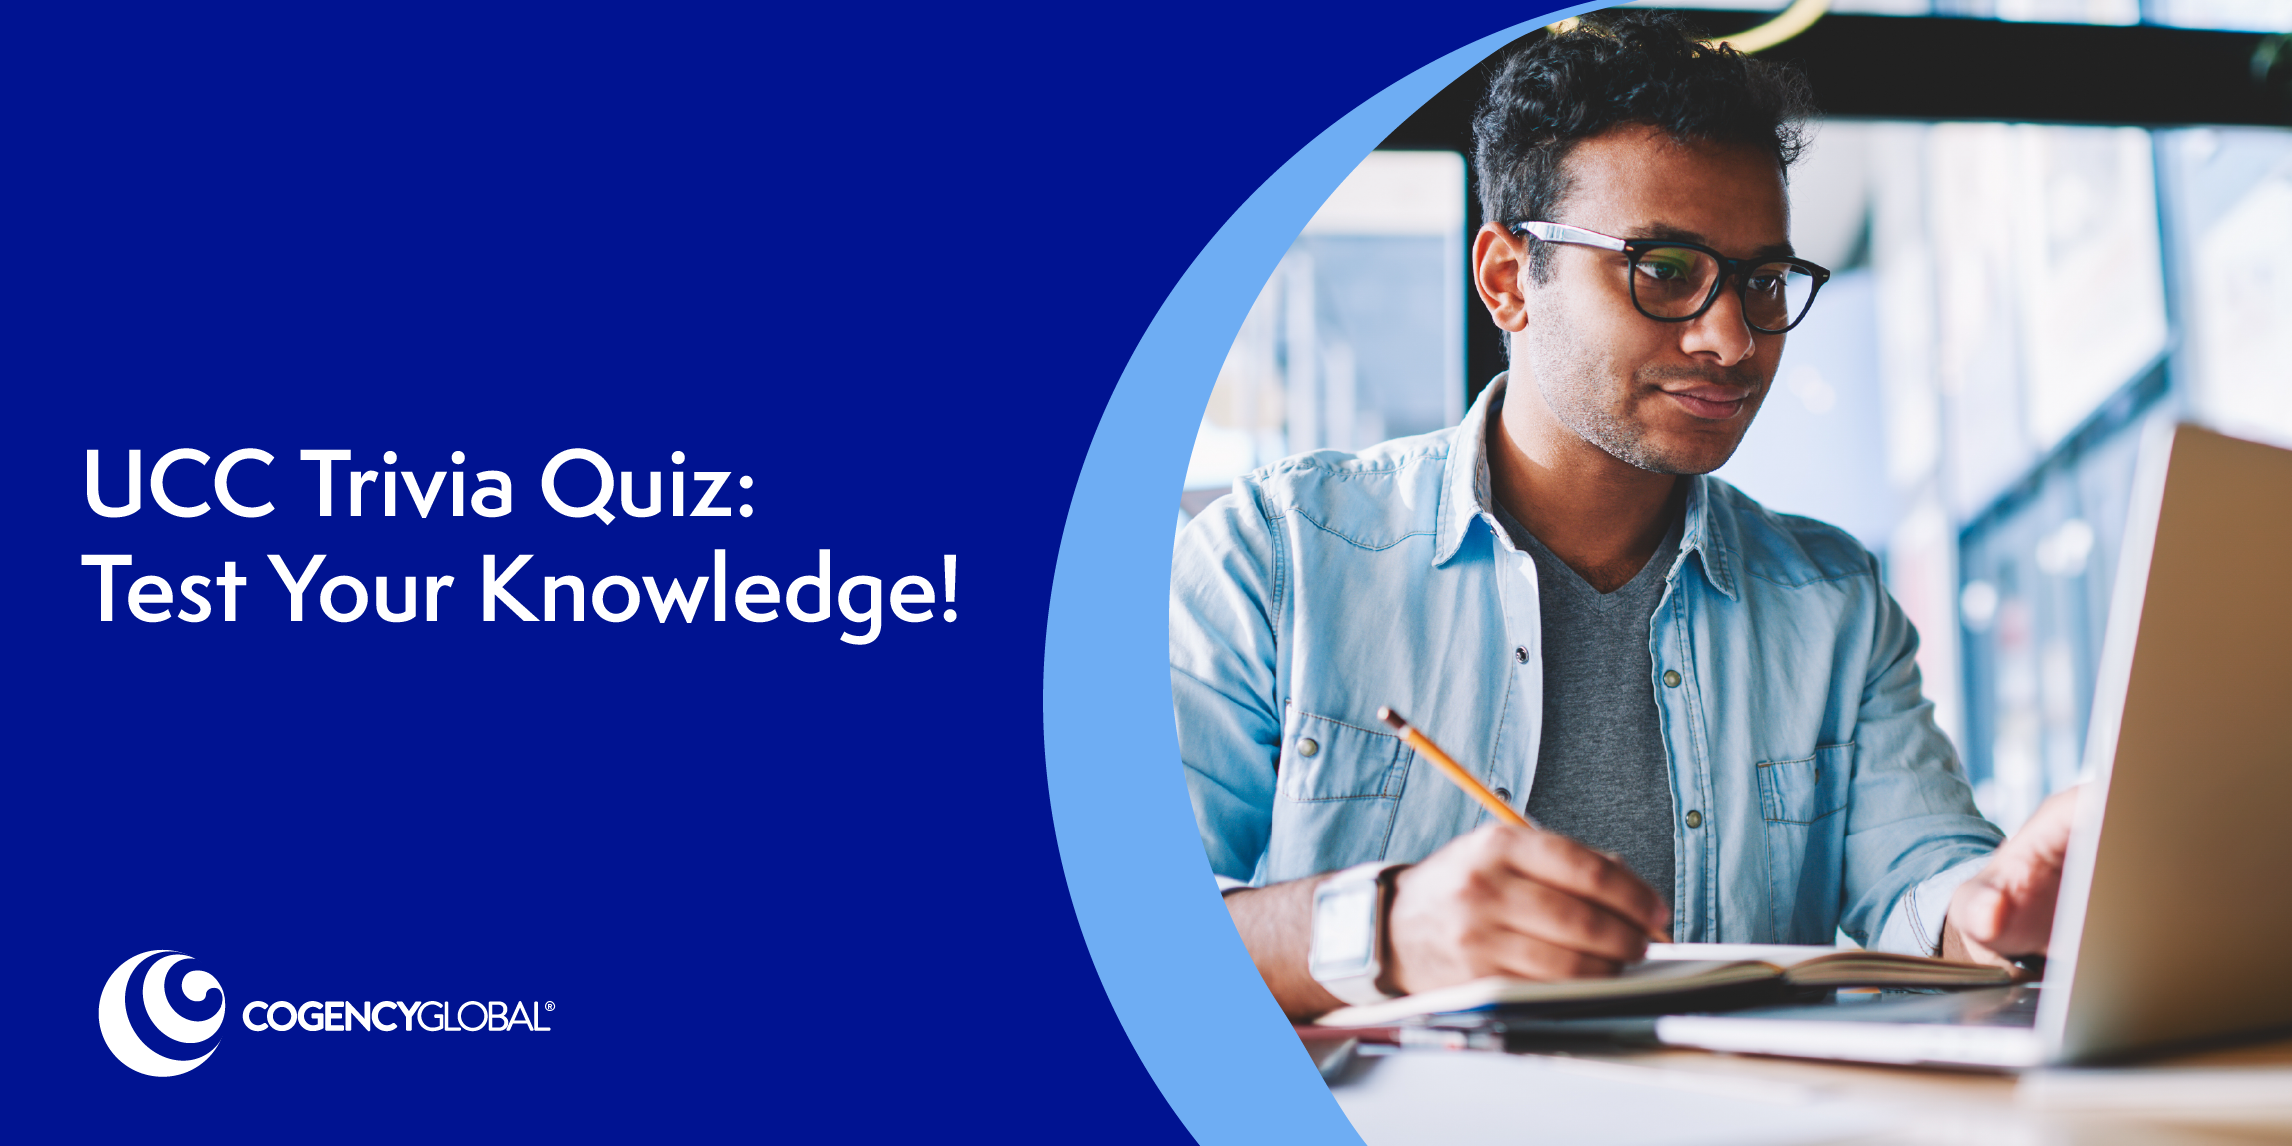 UCC Trivia Quiz: Test Your Knowledge!